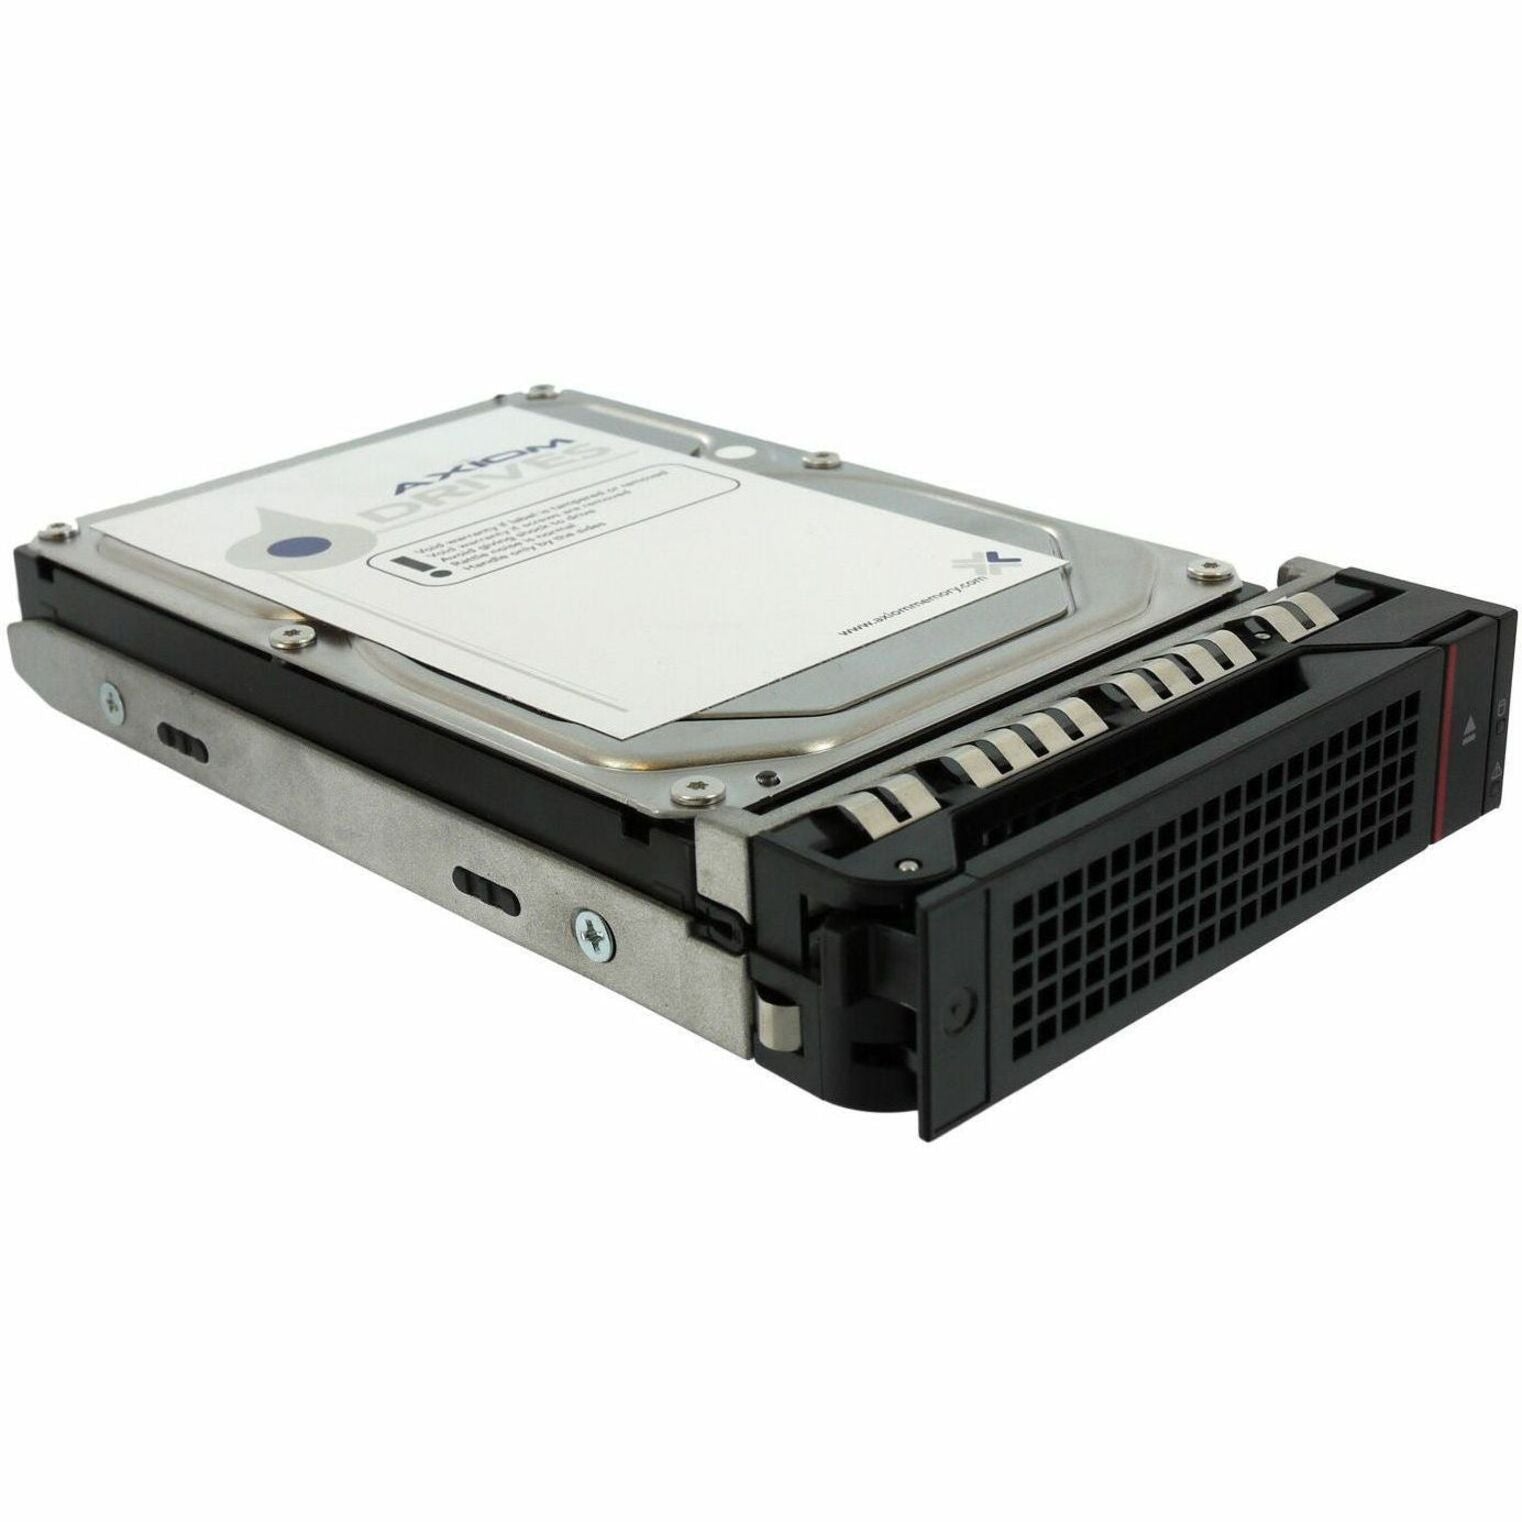 Axiom 4XB0K12255-AX Hard Drive: 3.5" SATA 6Gb/s Enterprise Hot-Swap Drive 7200rpm, 8TB Storage Capacity